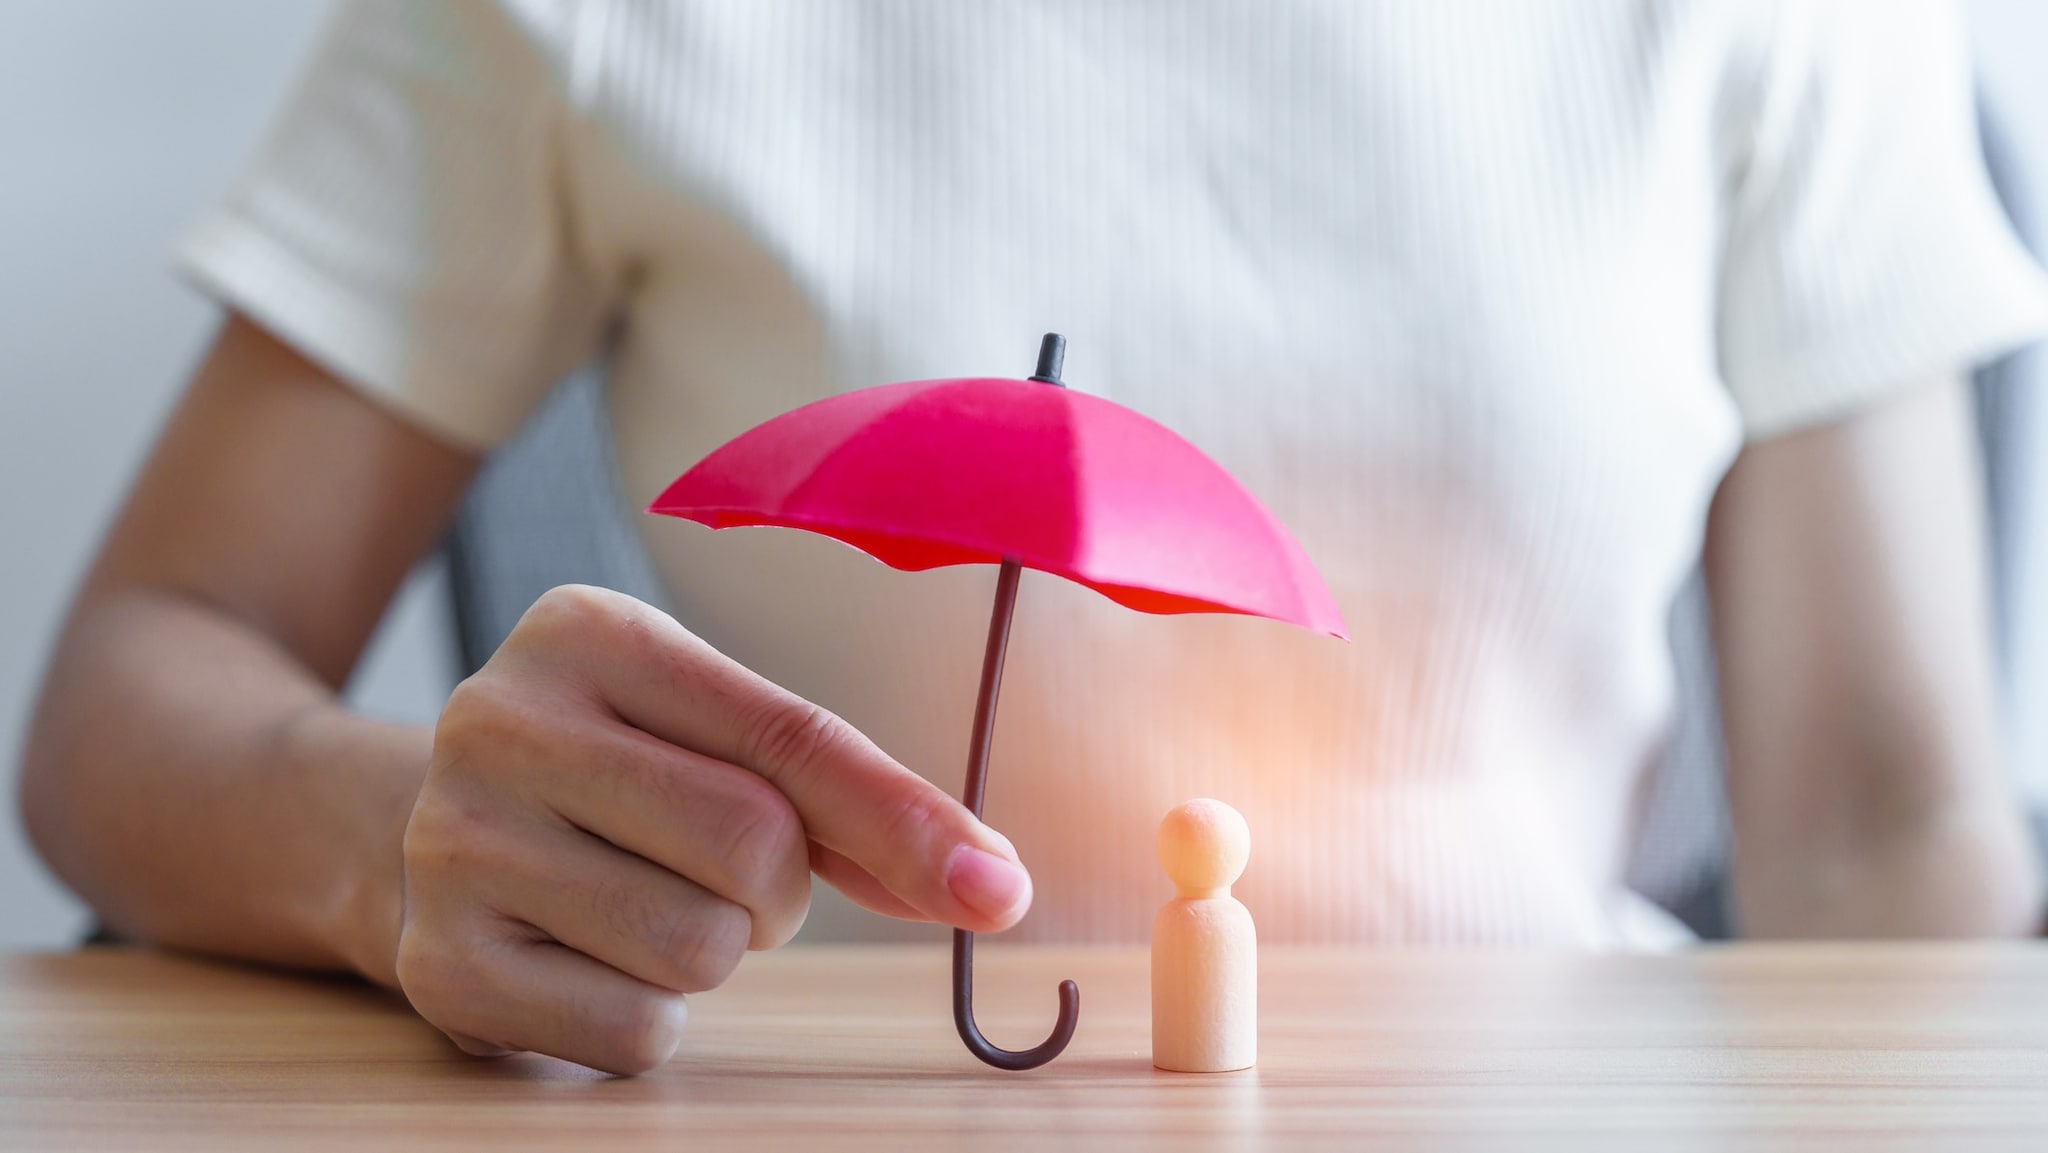 A person holding a miniature umbrella over a wooden person figure